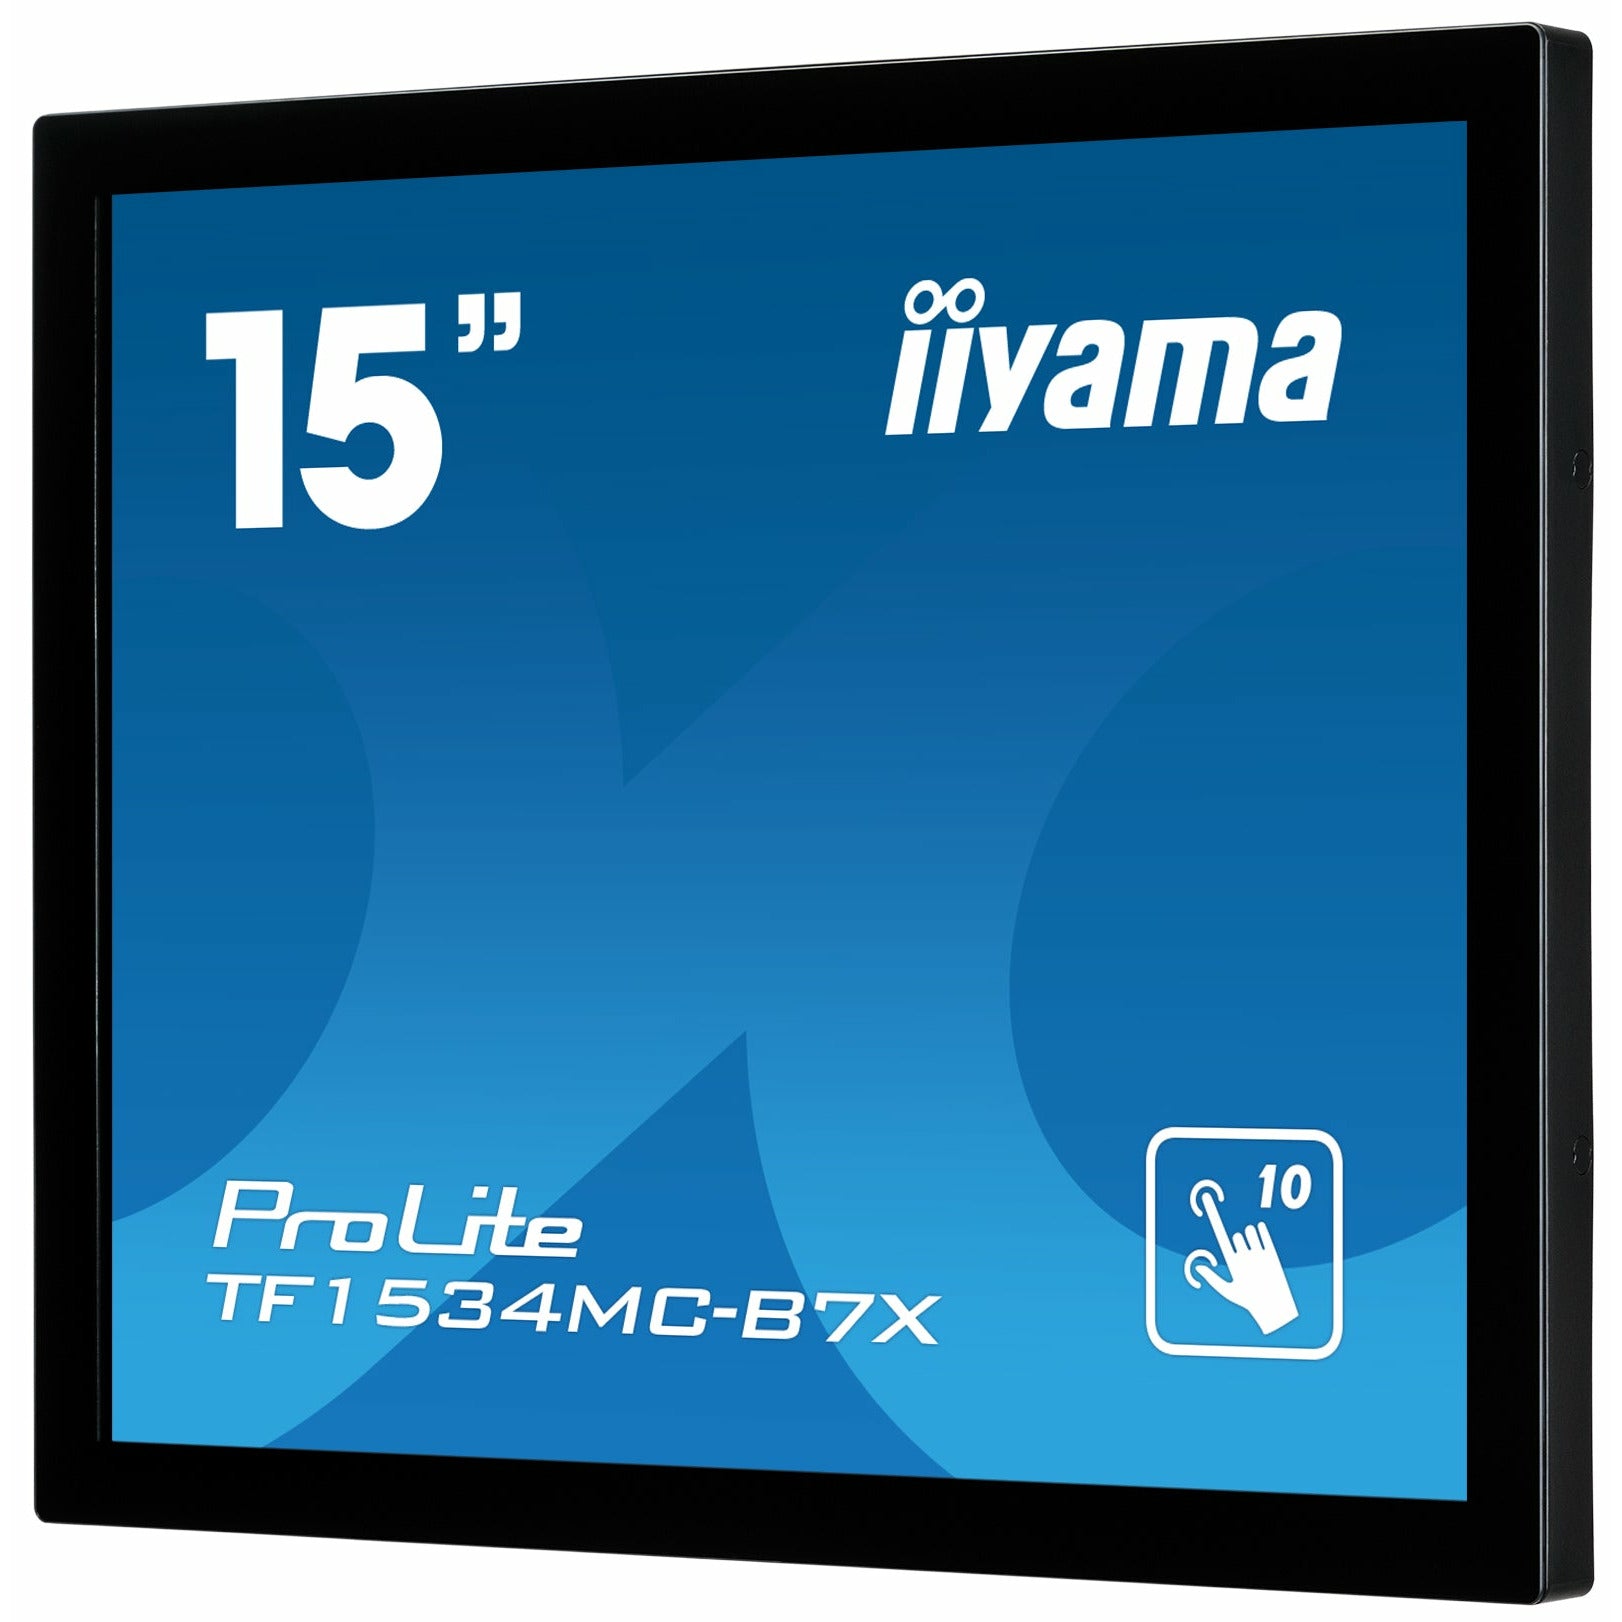 iiyama ProLite TF1534MC-B7X 15" Capacitive Touch Screen Display - image 4 of 9